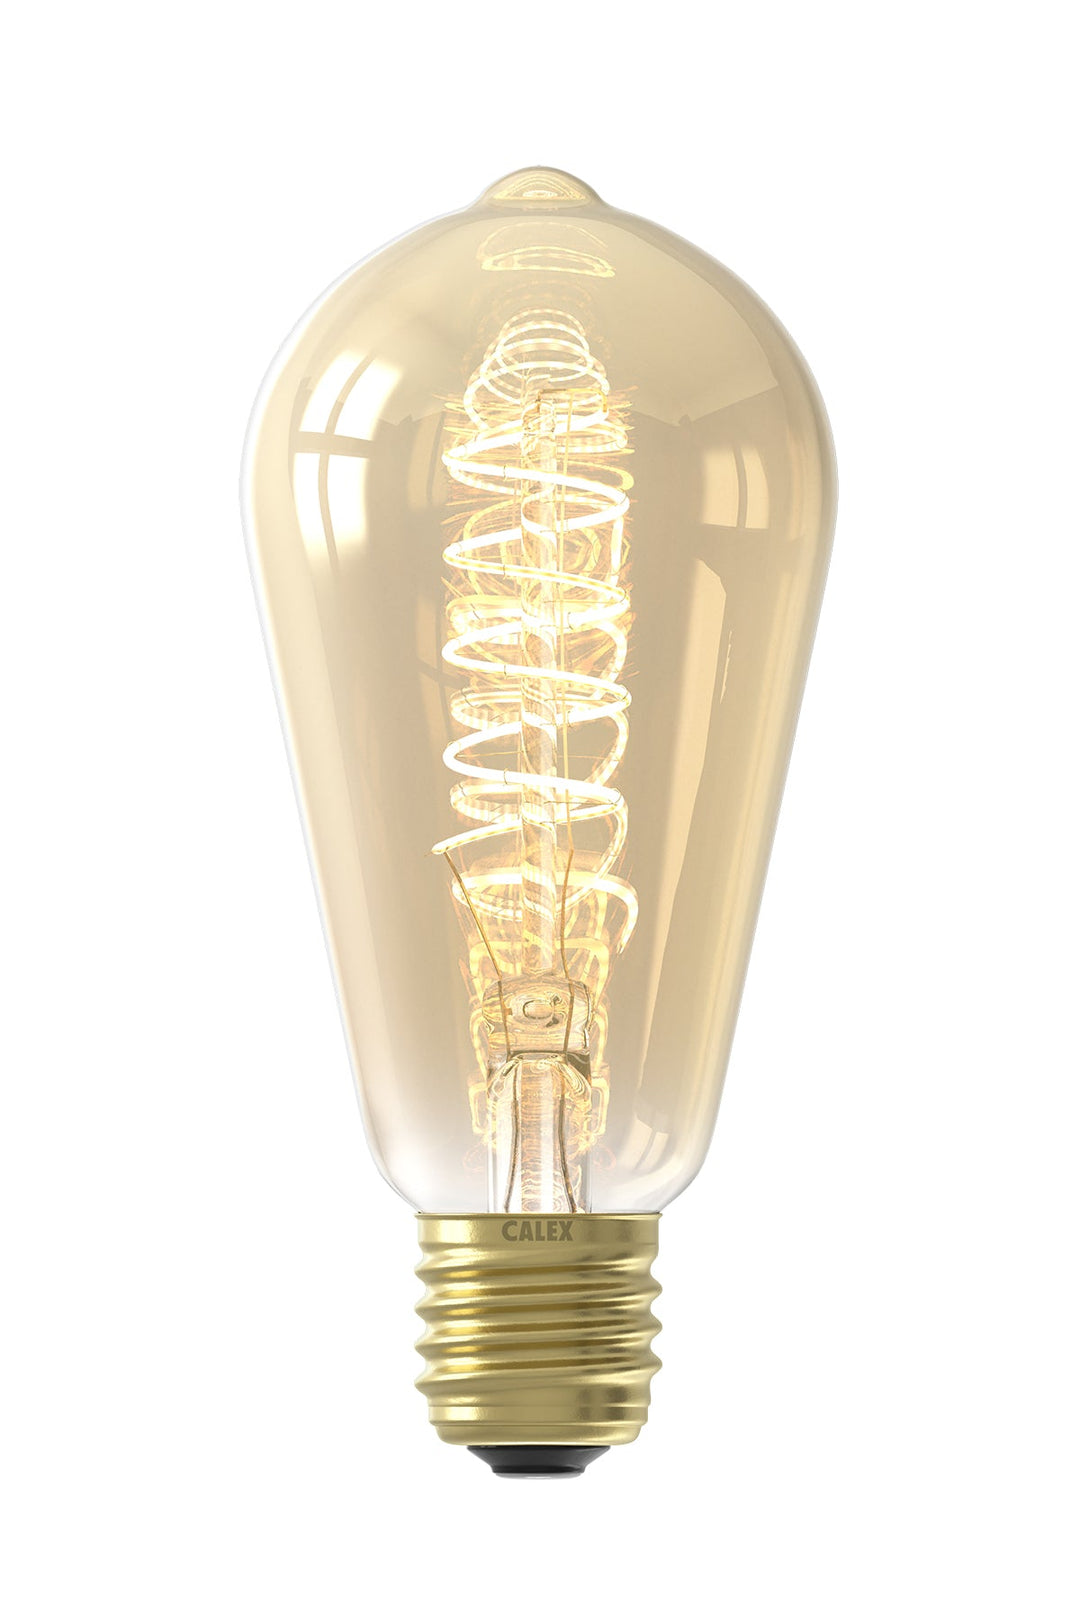 Calex LED Flex Filament Rustic Lamp ST64, Gold, E27, Dimmable 1001002000